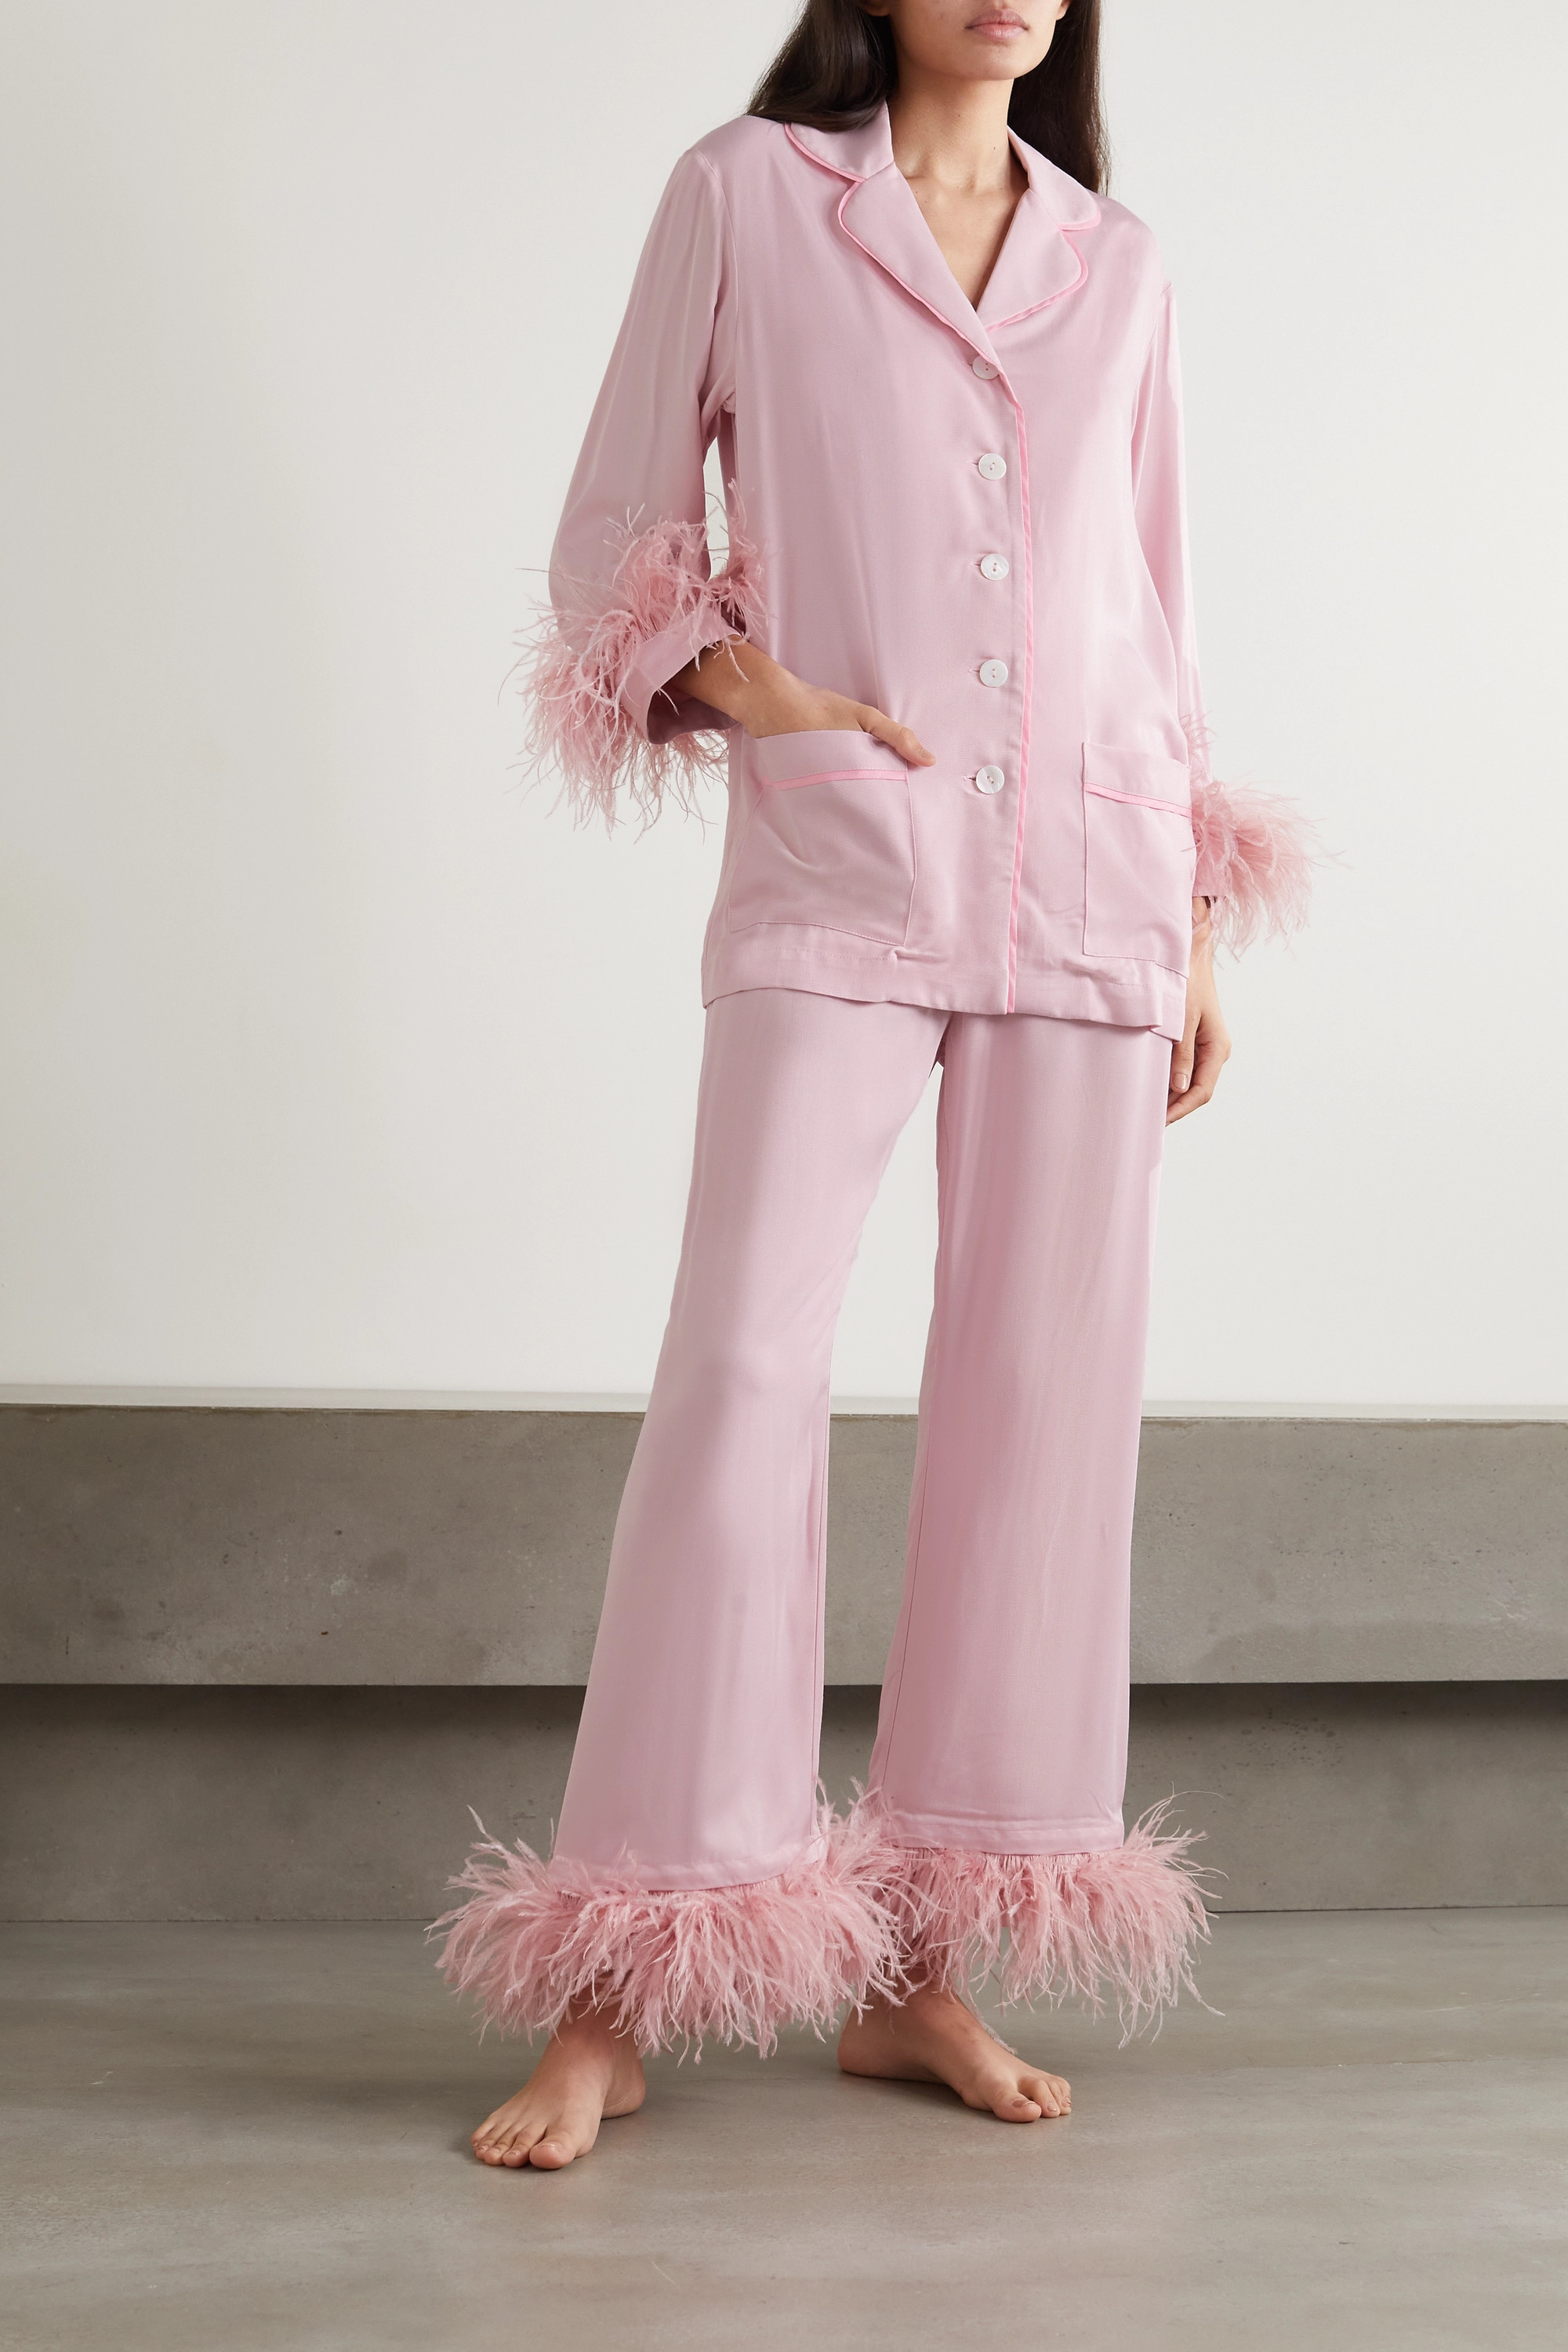 Sleeper Double Feather Party Pajamas, $320 via Net-a-Porter